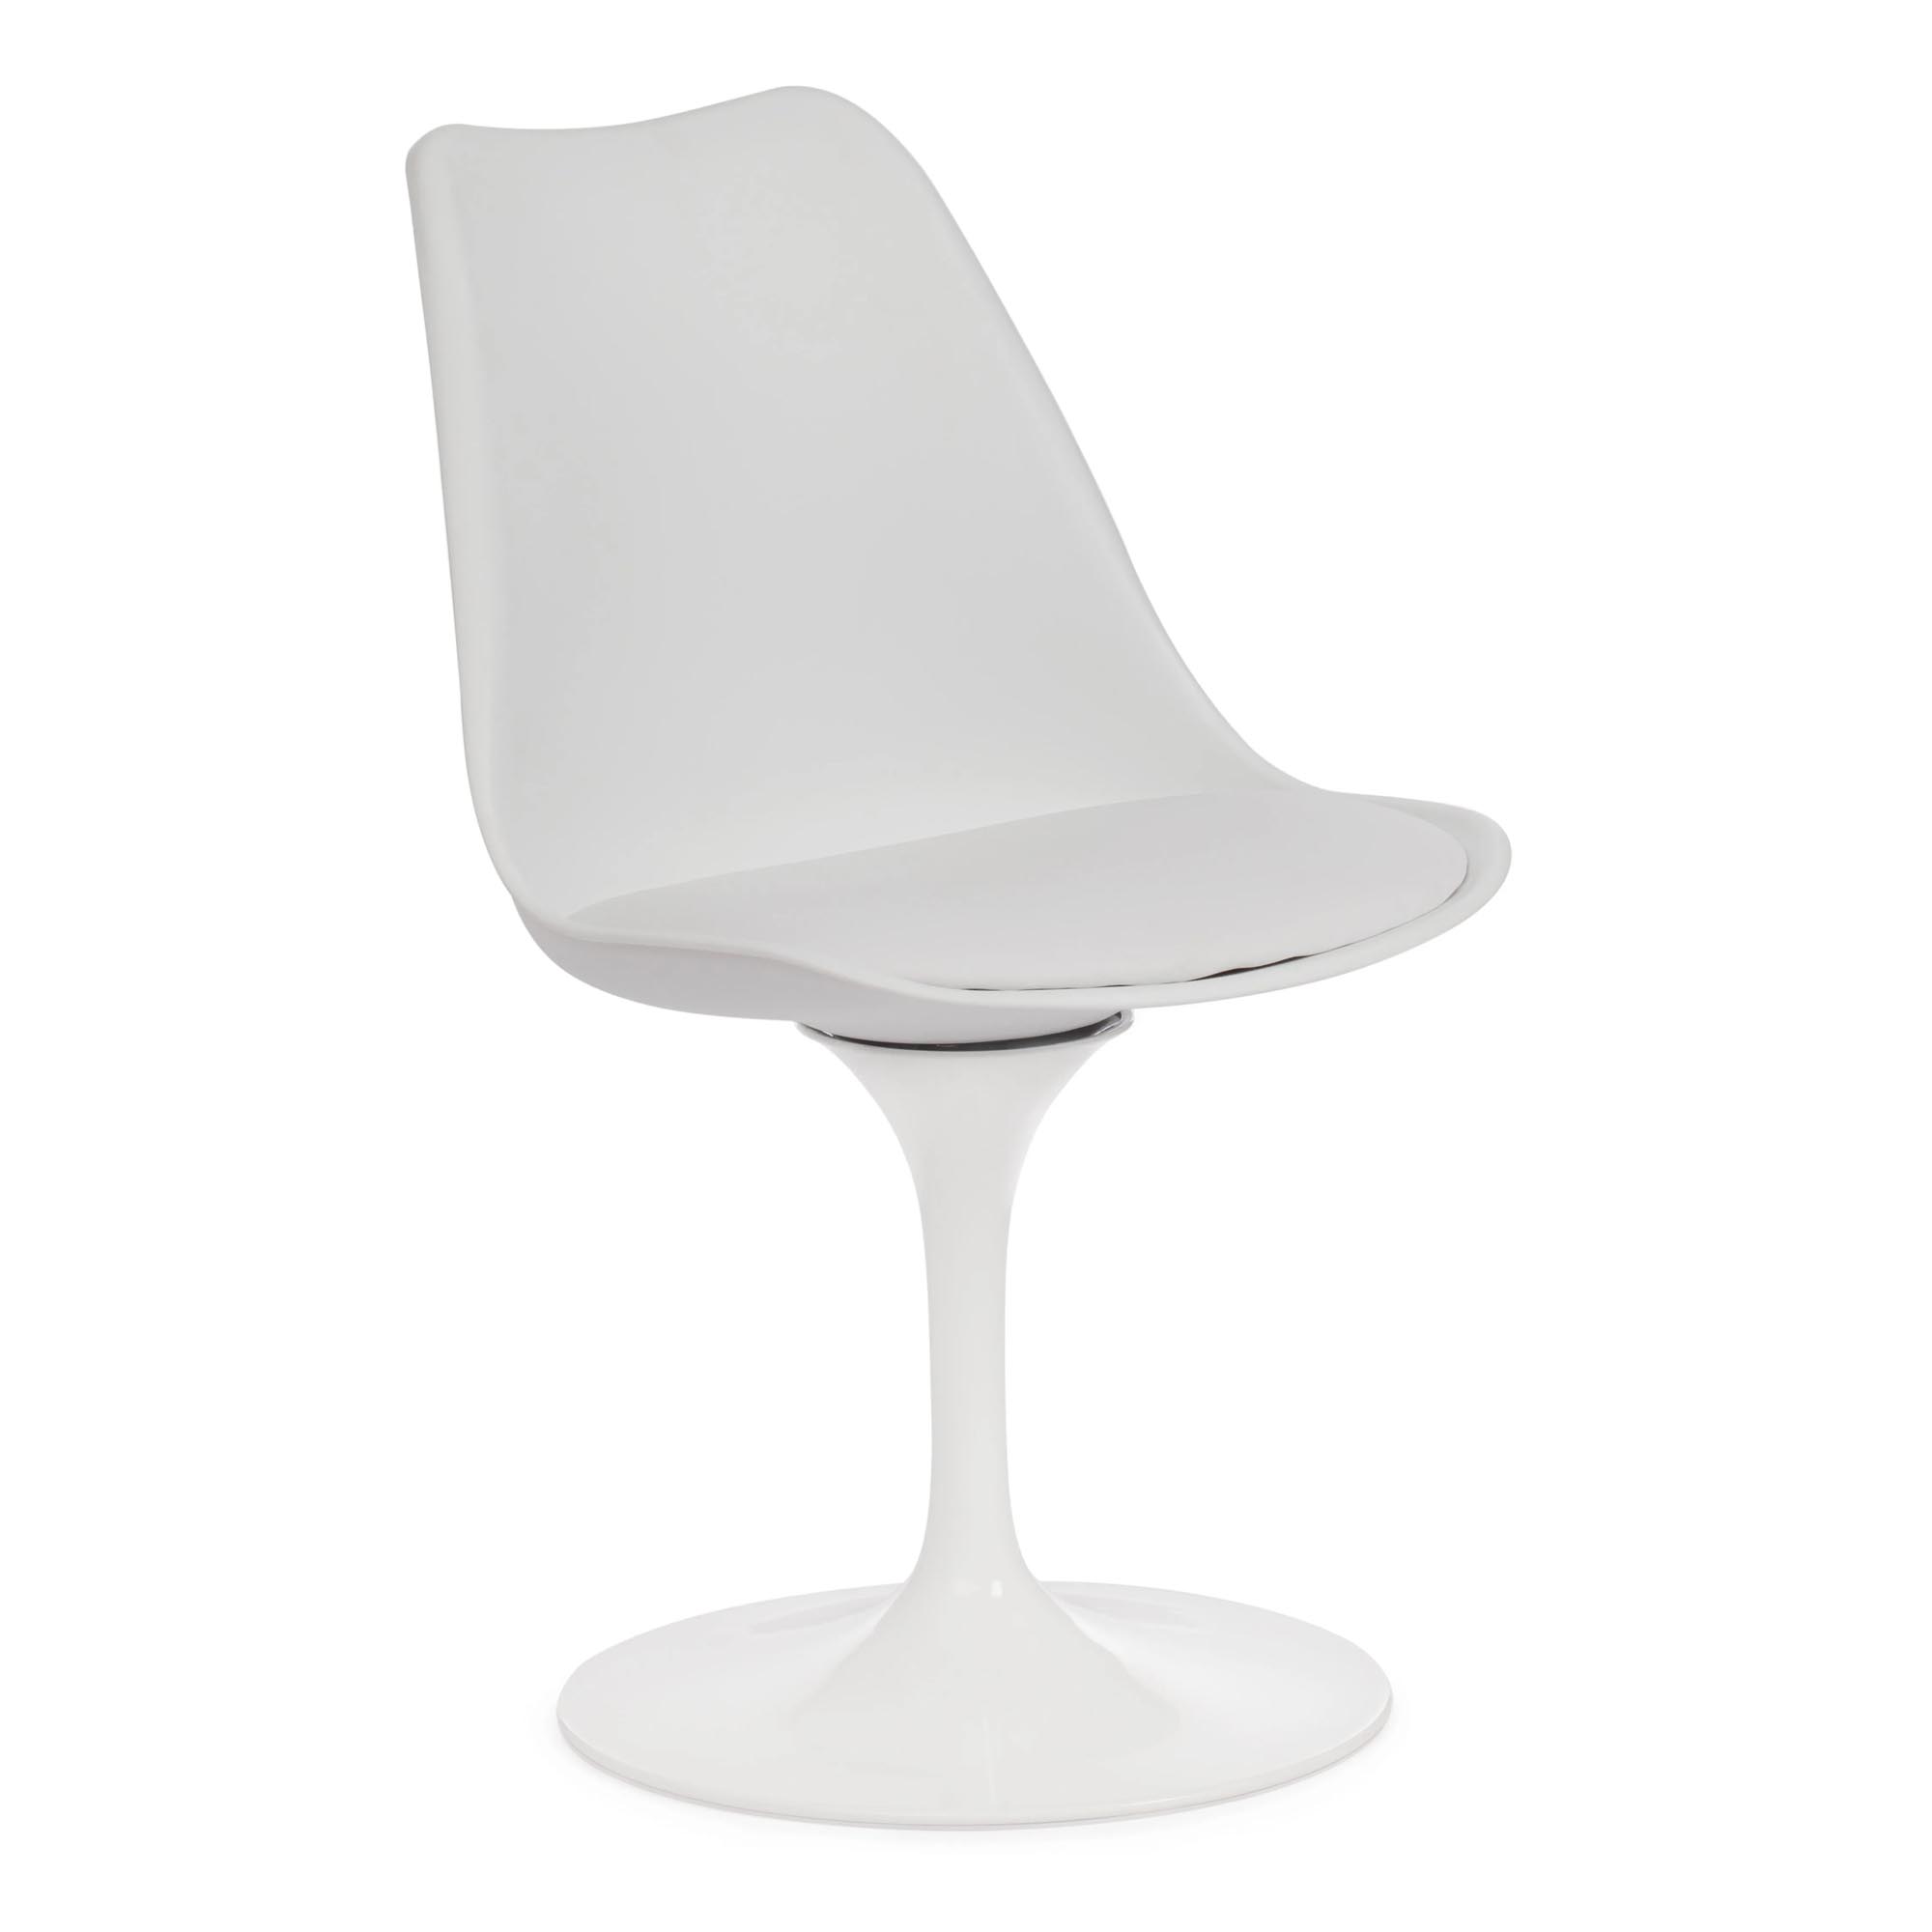 Стул TC Tulip fashion chair 55x48x81 см белый стул chair раскладной бежевый стул серый металл